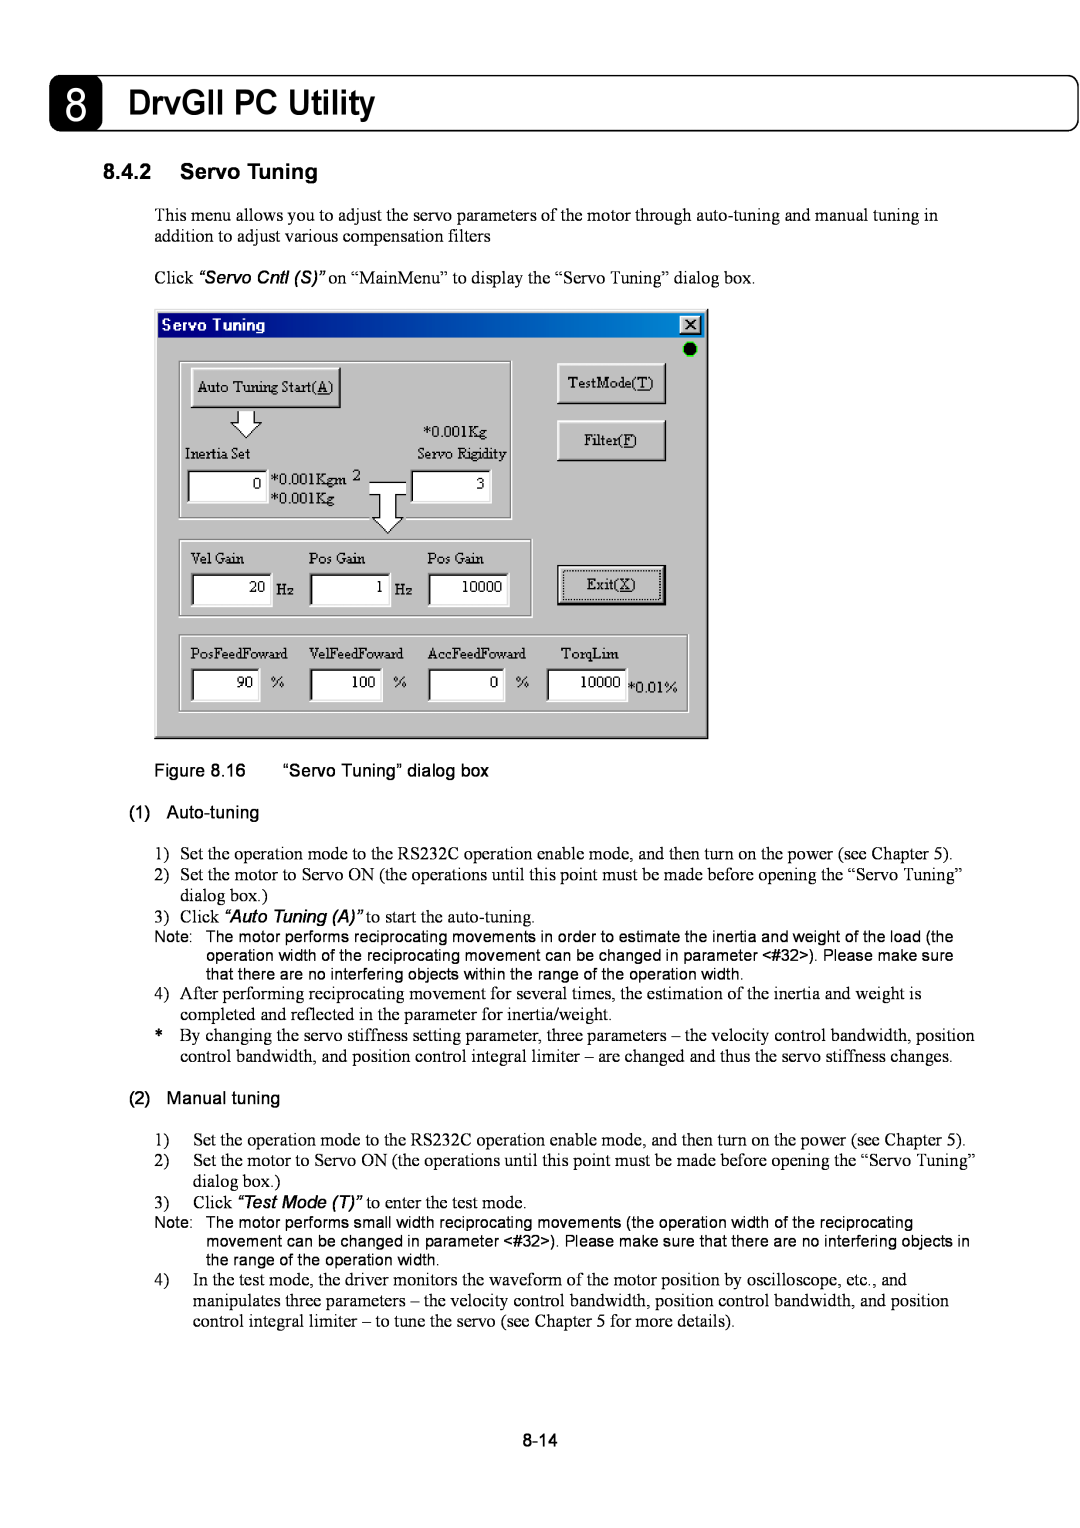 Parker Hannifin G2 manual DrvGII PC Utility, 16 “Servo Tuning” dialog box 1 Auto-tuning, Manual tuning, 8-14 